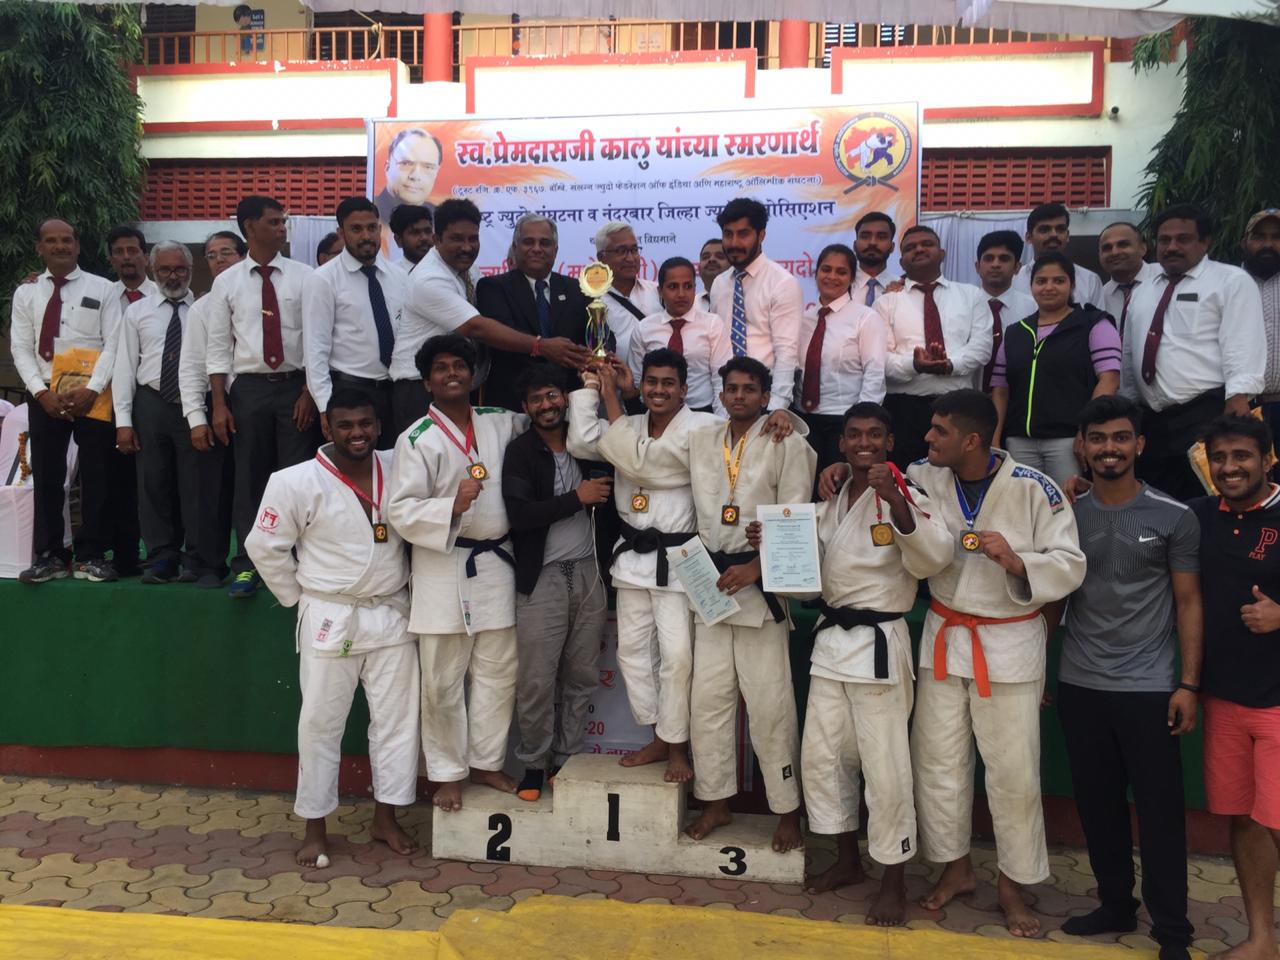 MUMBAI - Boys CHAMPIONShip Winning Team at the Jr. State CHAMPIONShip, Nandurbar - 2019-20 